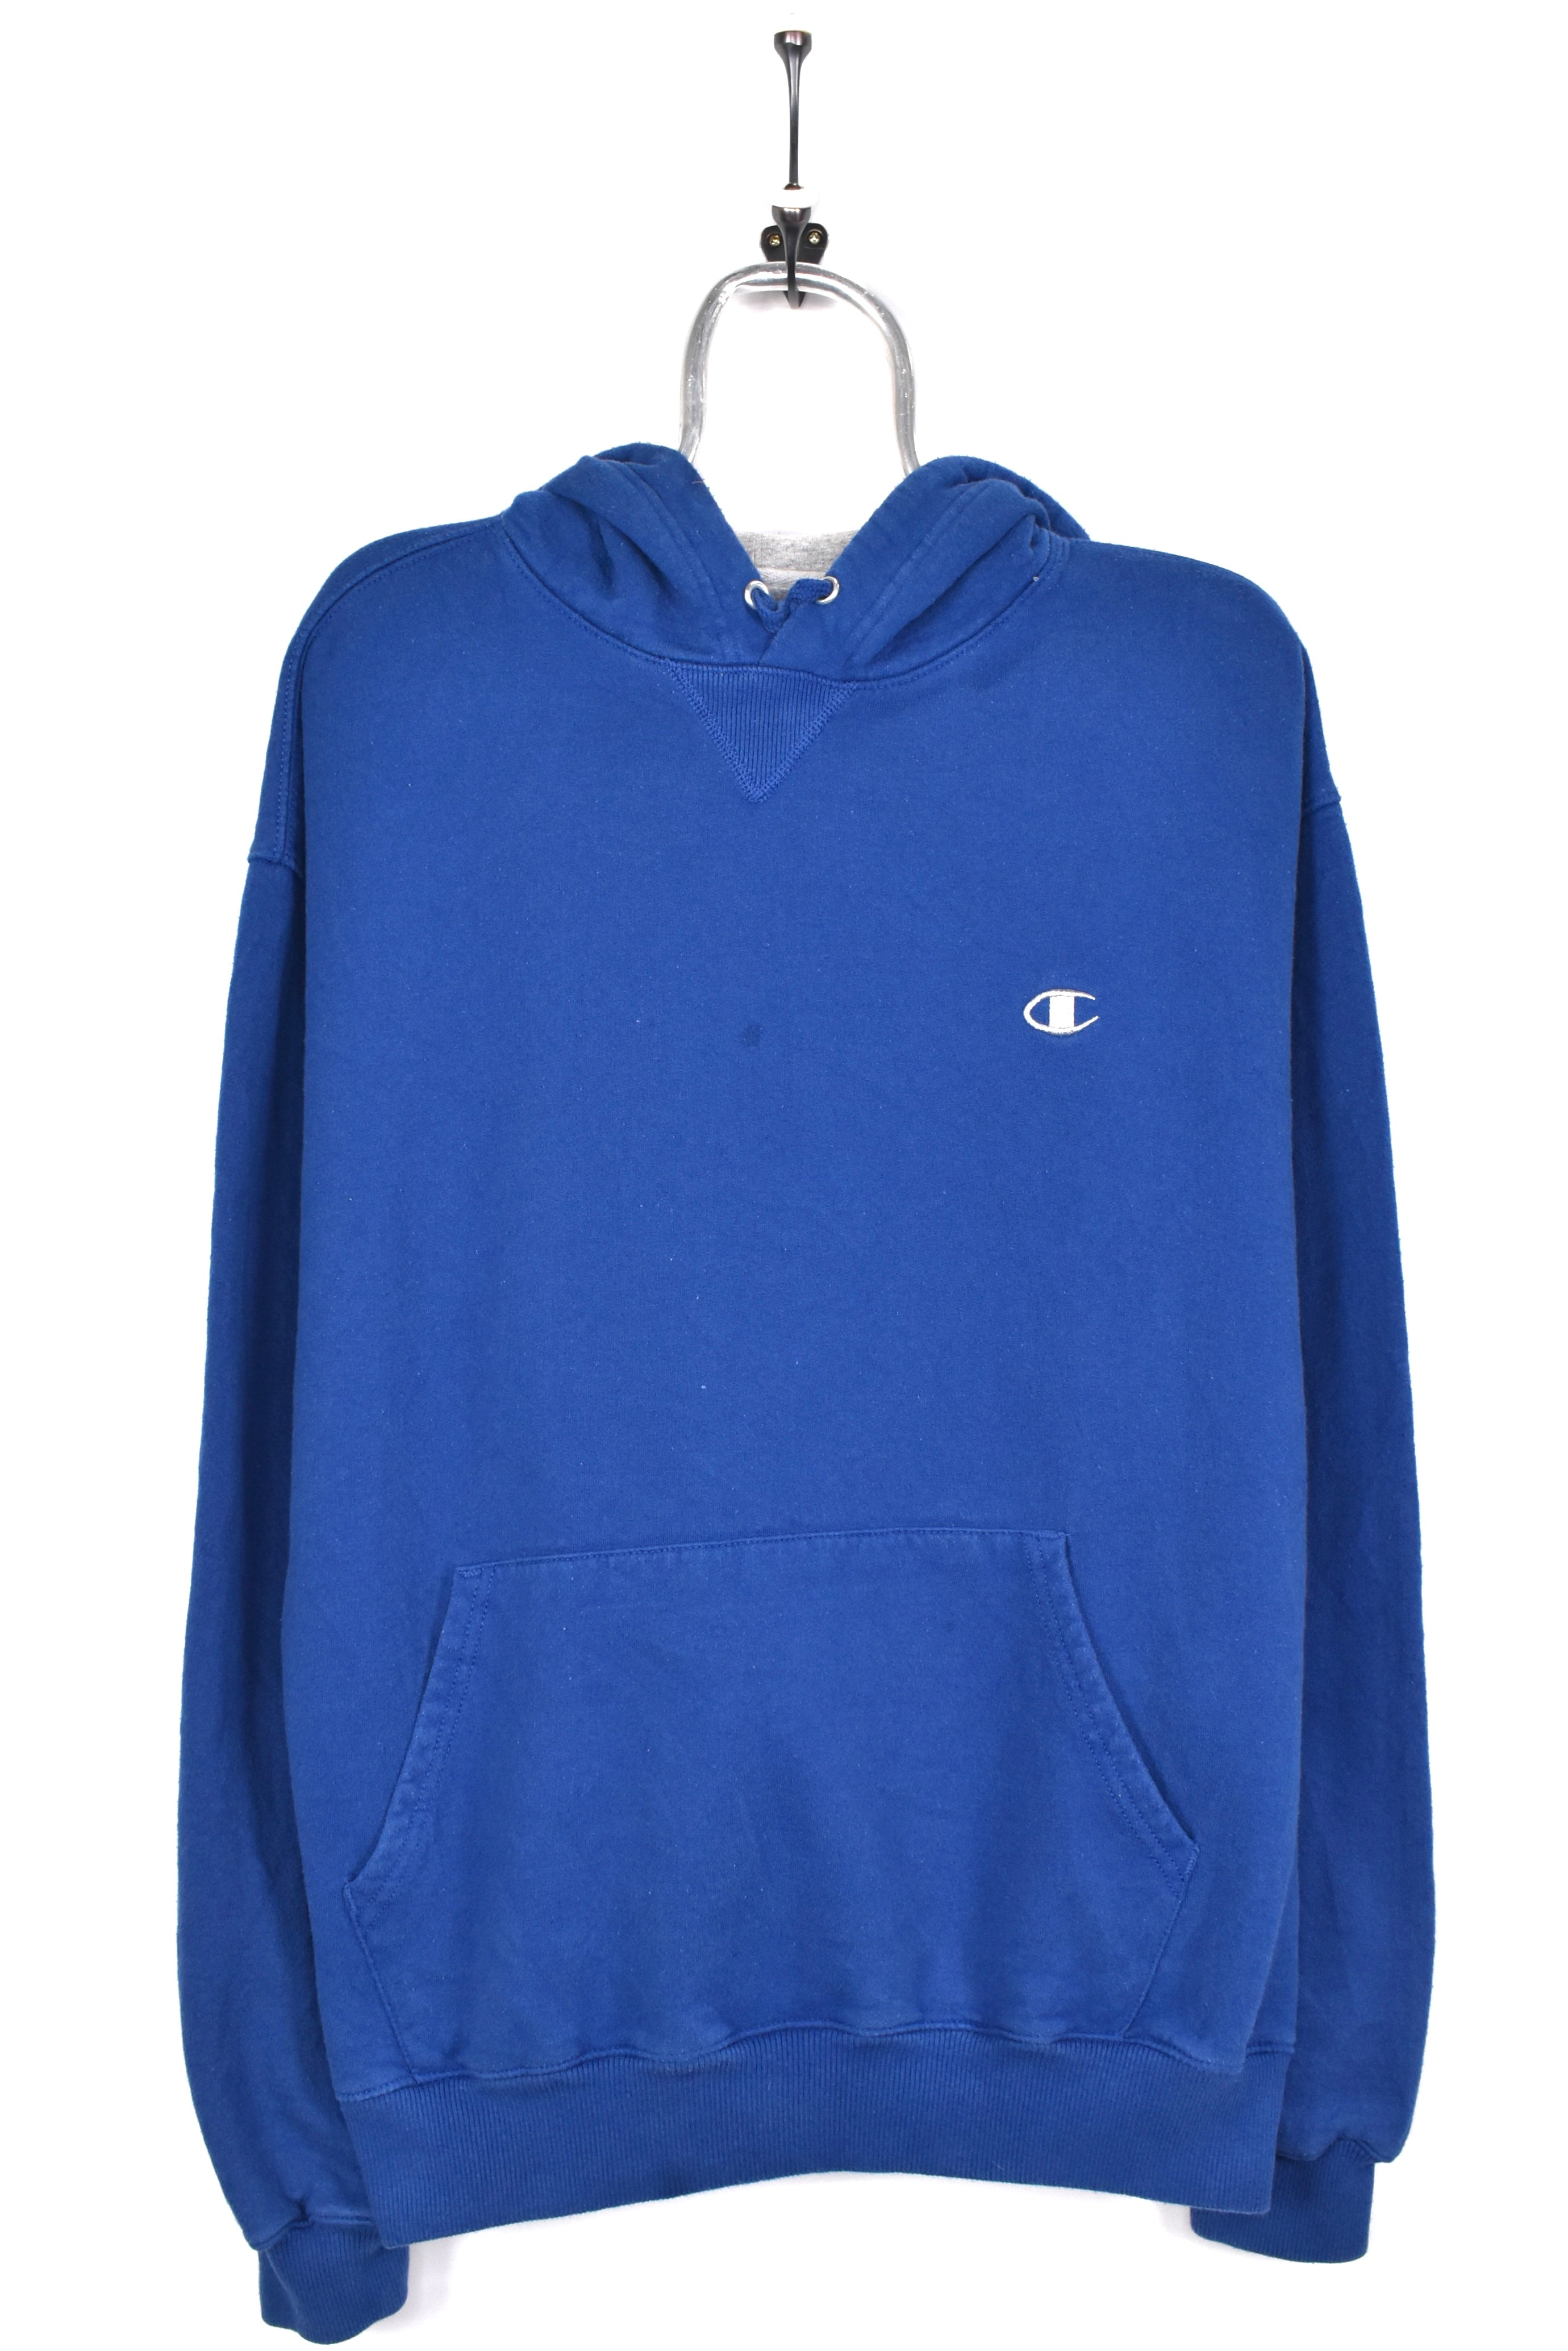 Vintage Champion hoodie, navy blue embroidered sweatshirt - AU Large CHAMPION